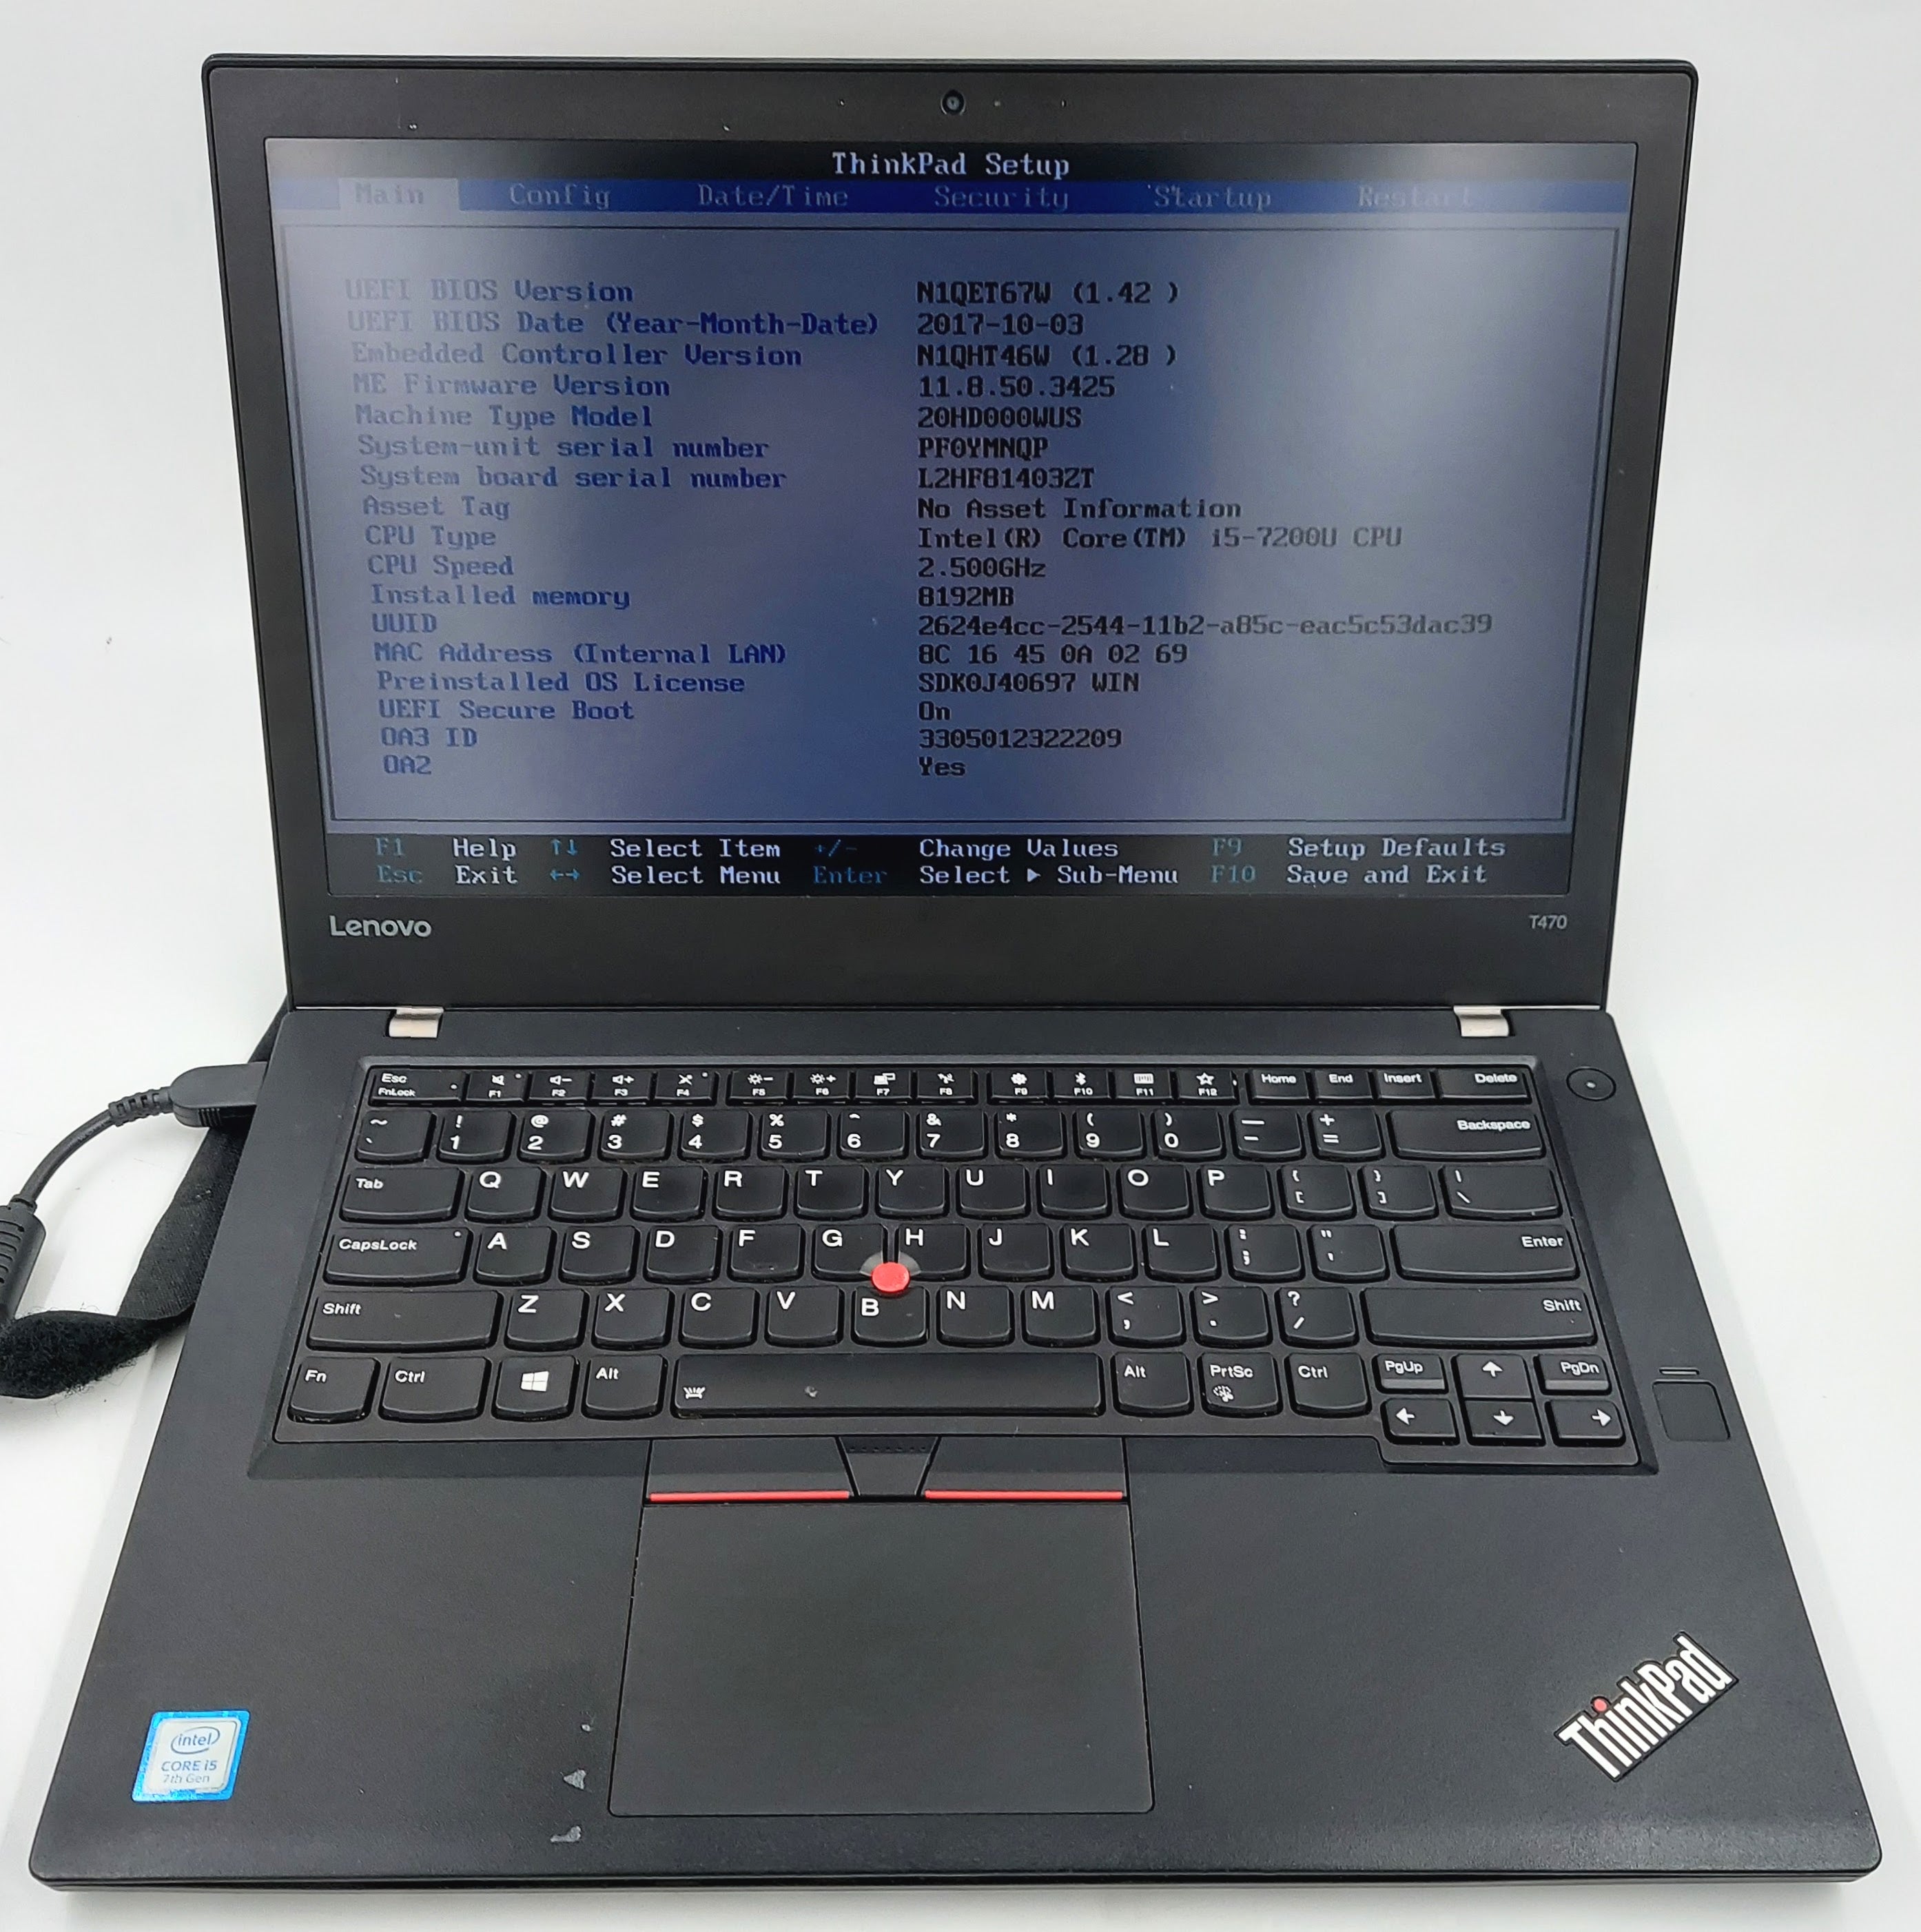 Lenovo Thinkpad T470 i7-6500U U 2.5GHz Laptop - 8GB RAM 256GB SSD - Win 10 Pro